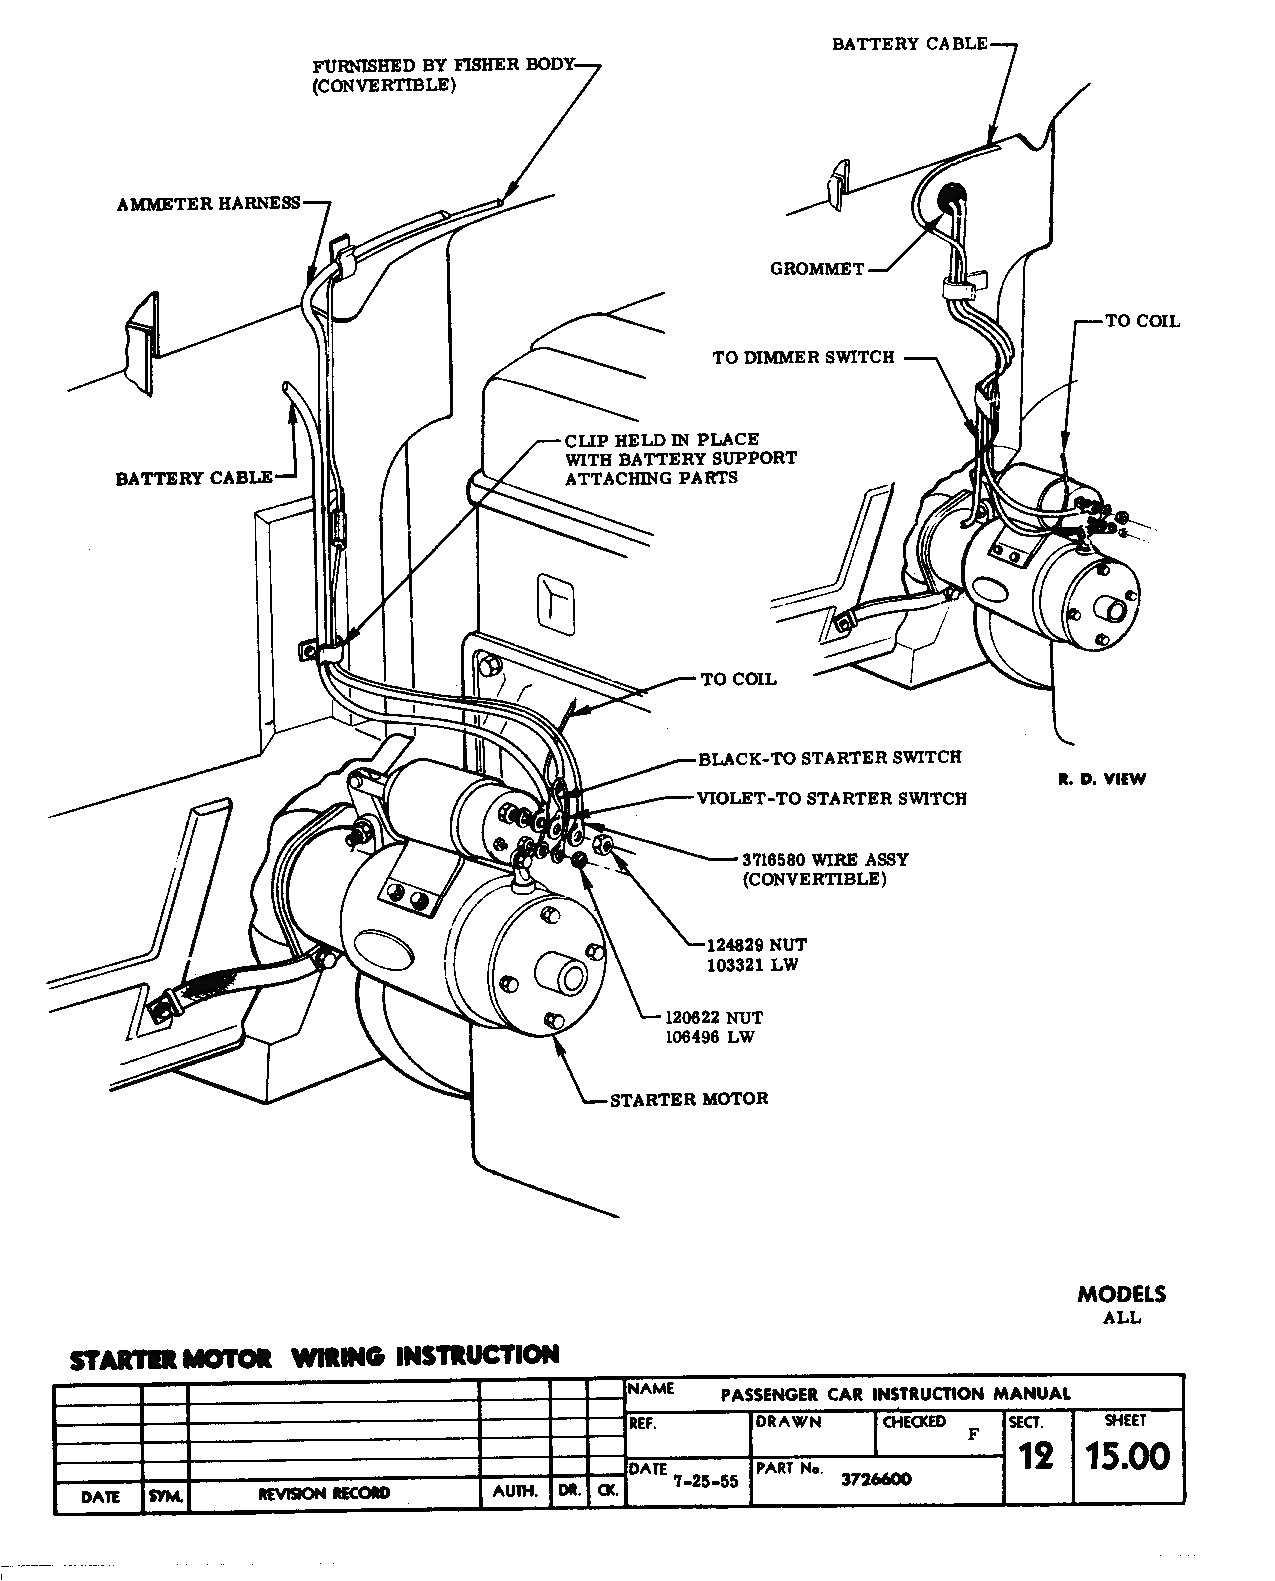 2004 mazda tribute engine diagram wiring diagram mazda 323 bg mazda wiring diagrams instructions of 2004 mazda tribute engine diagram jpg